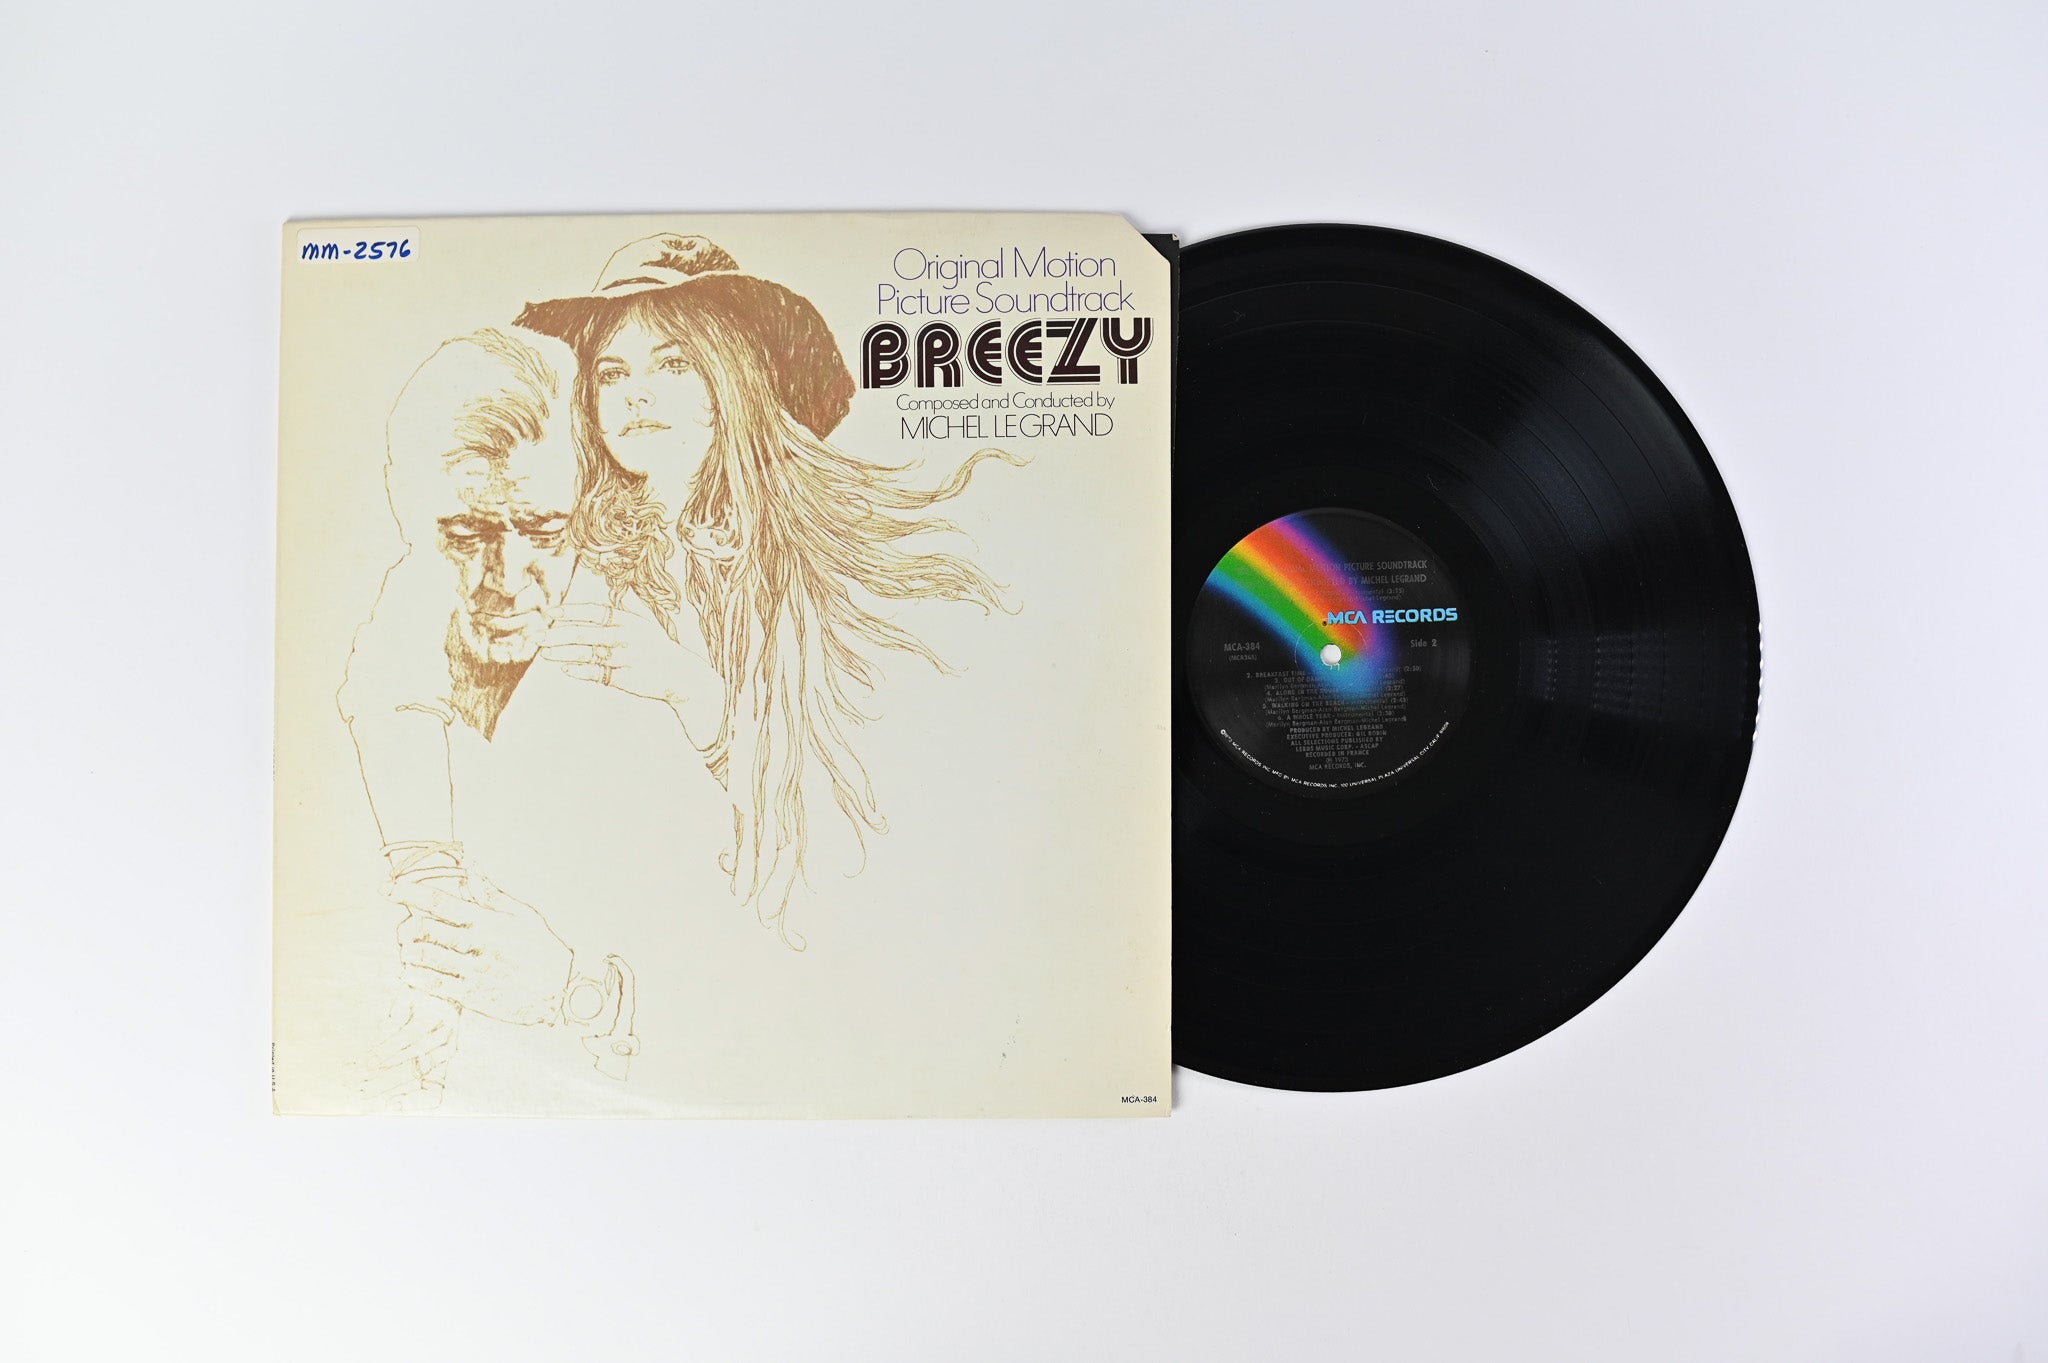 Michel Legrand - Breezy (Original Motion Picture Soundtrack) on MCA Records